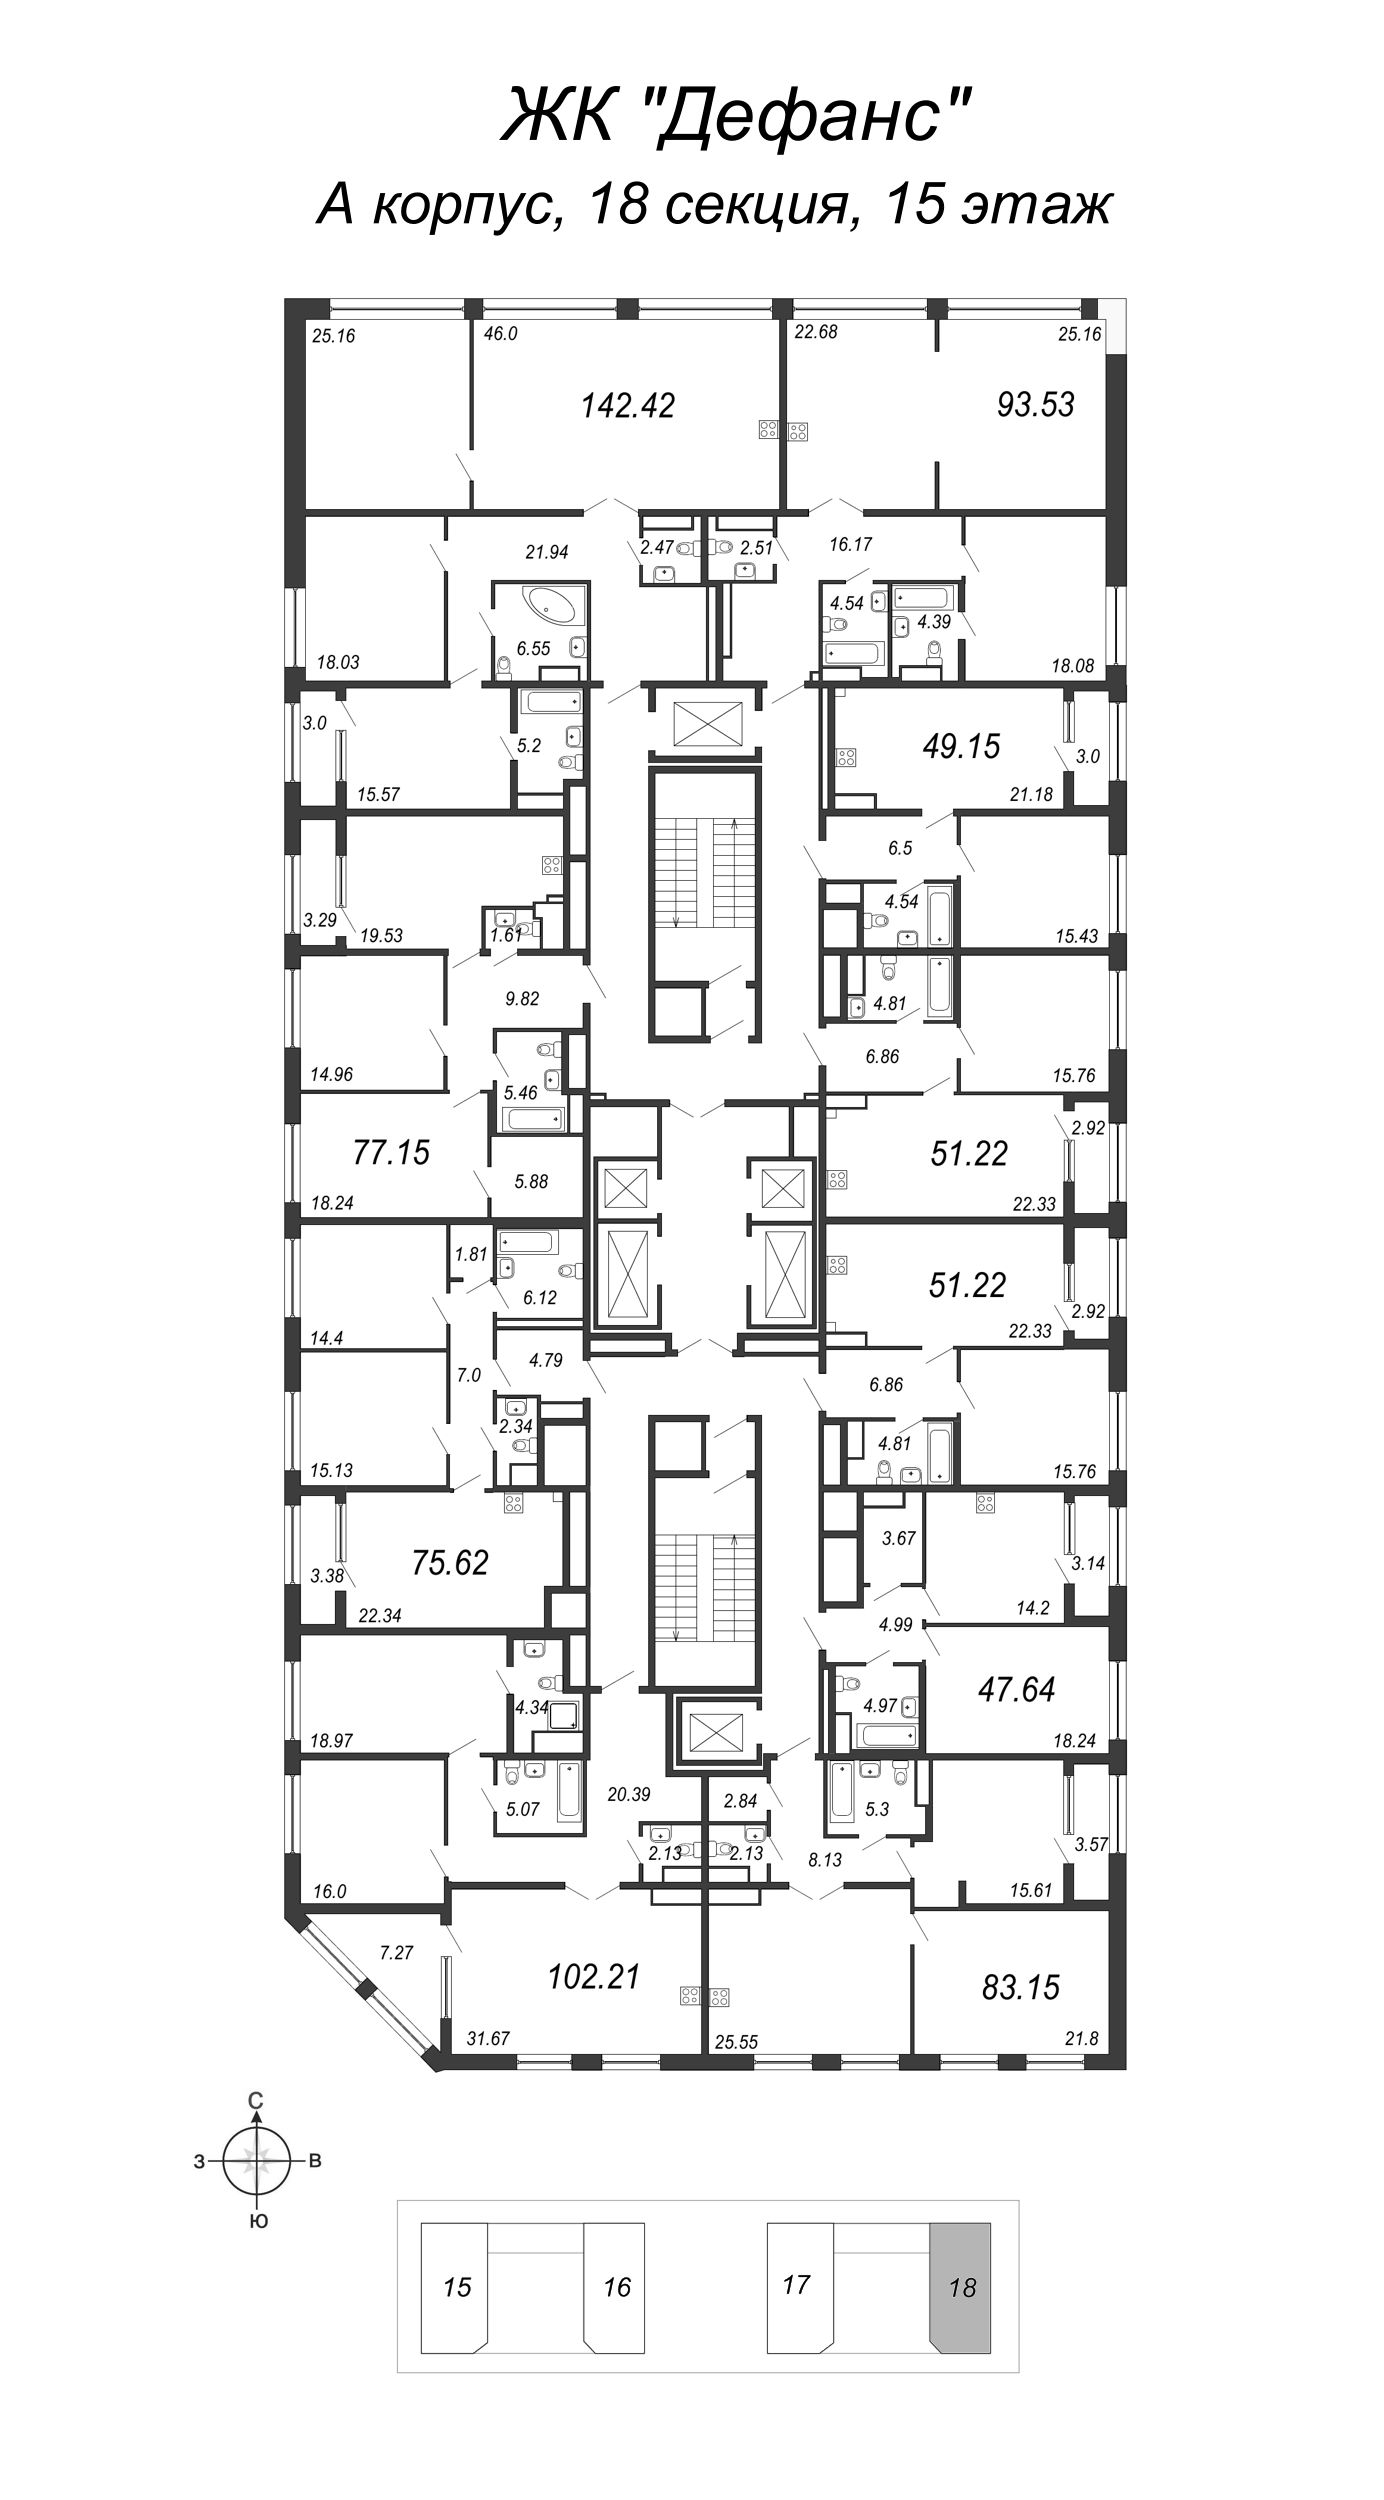 2-комнатная (Евро) квартира, 51.22 м² - планировка этажа